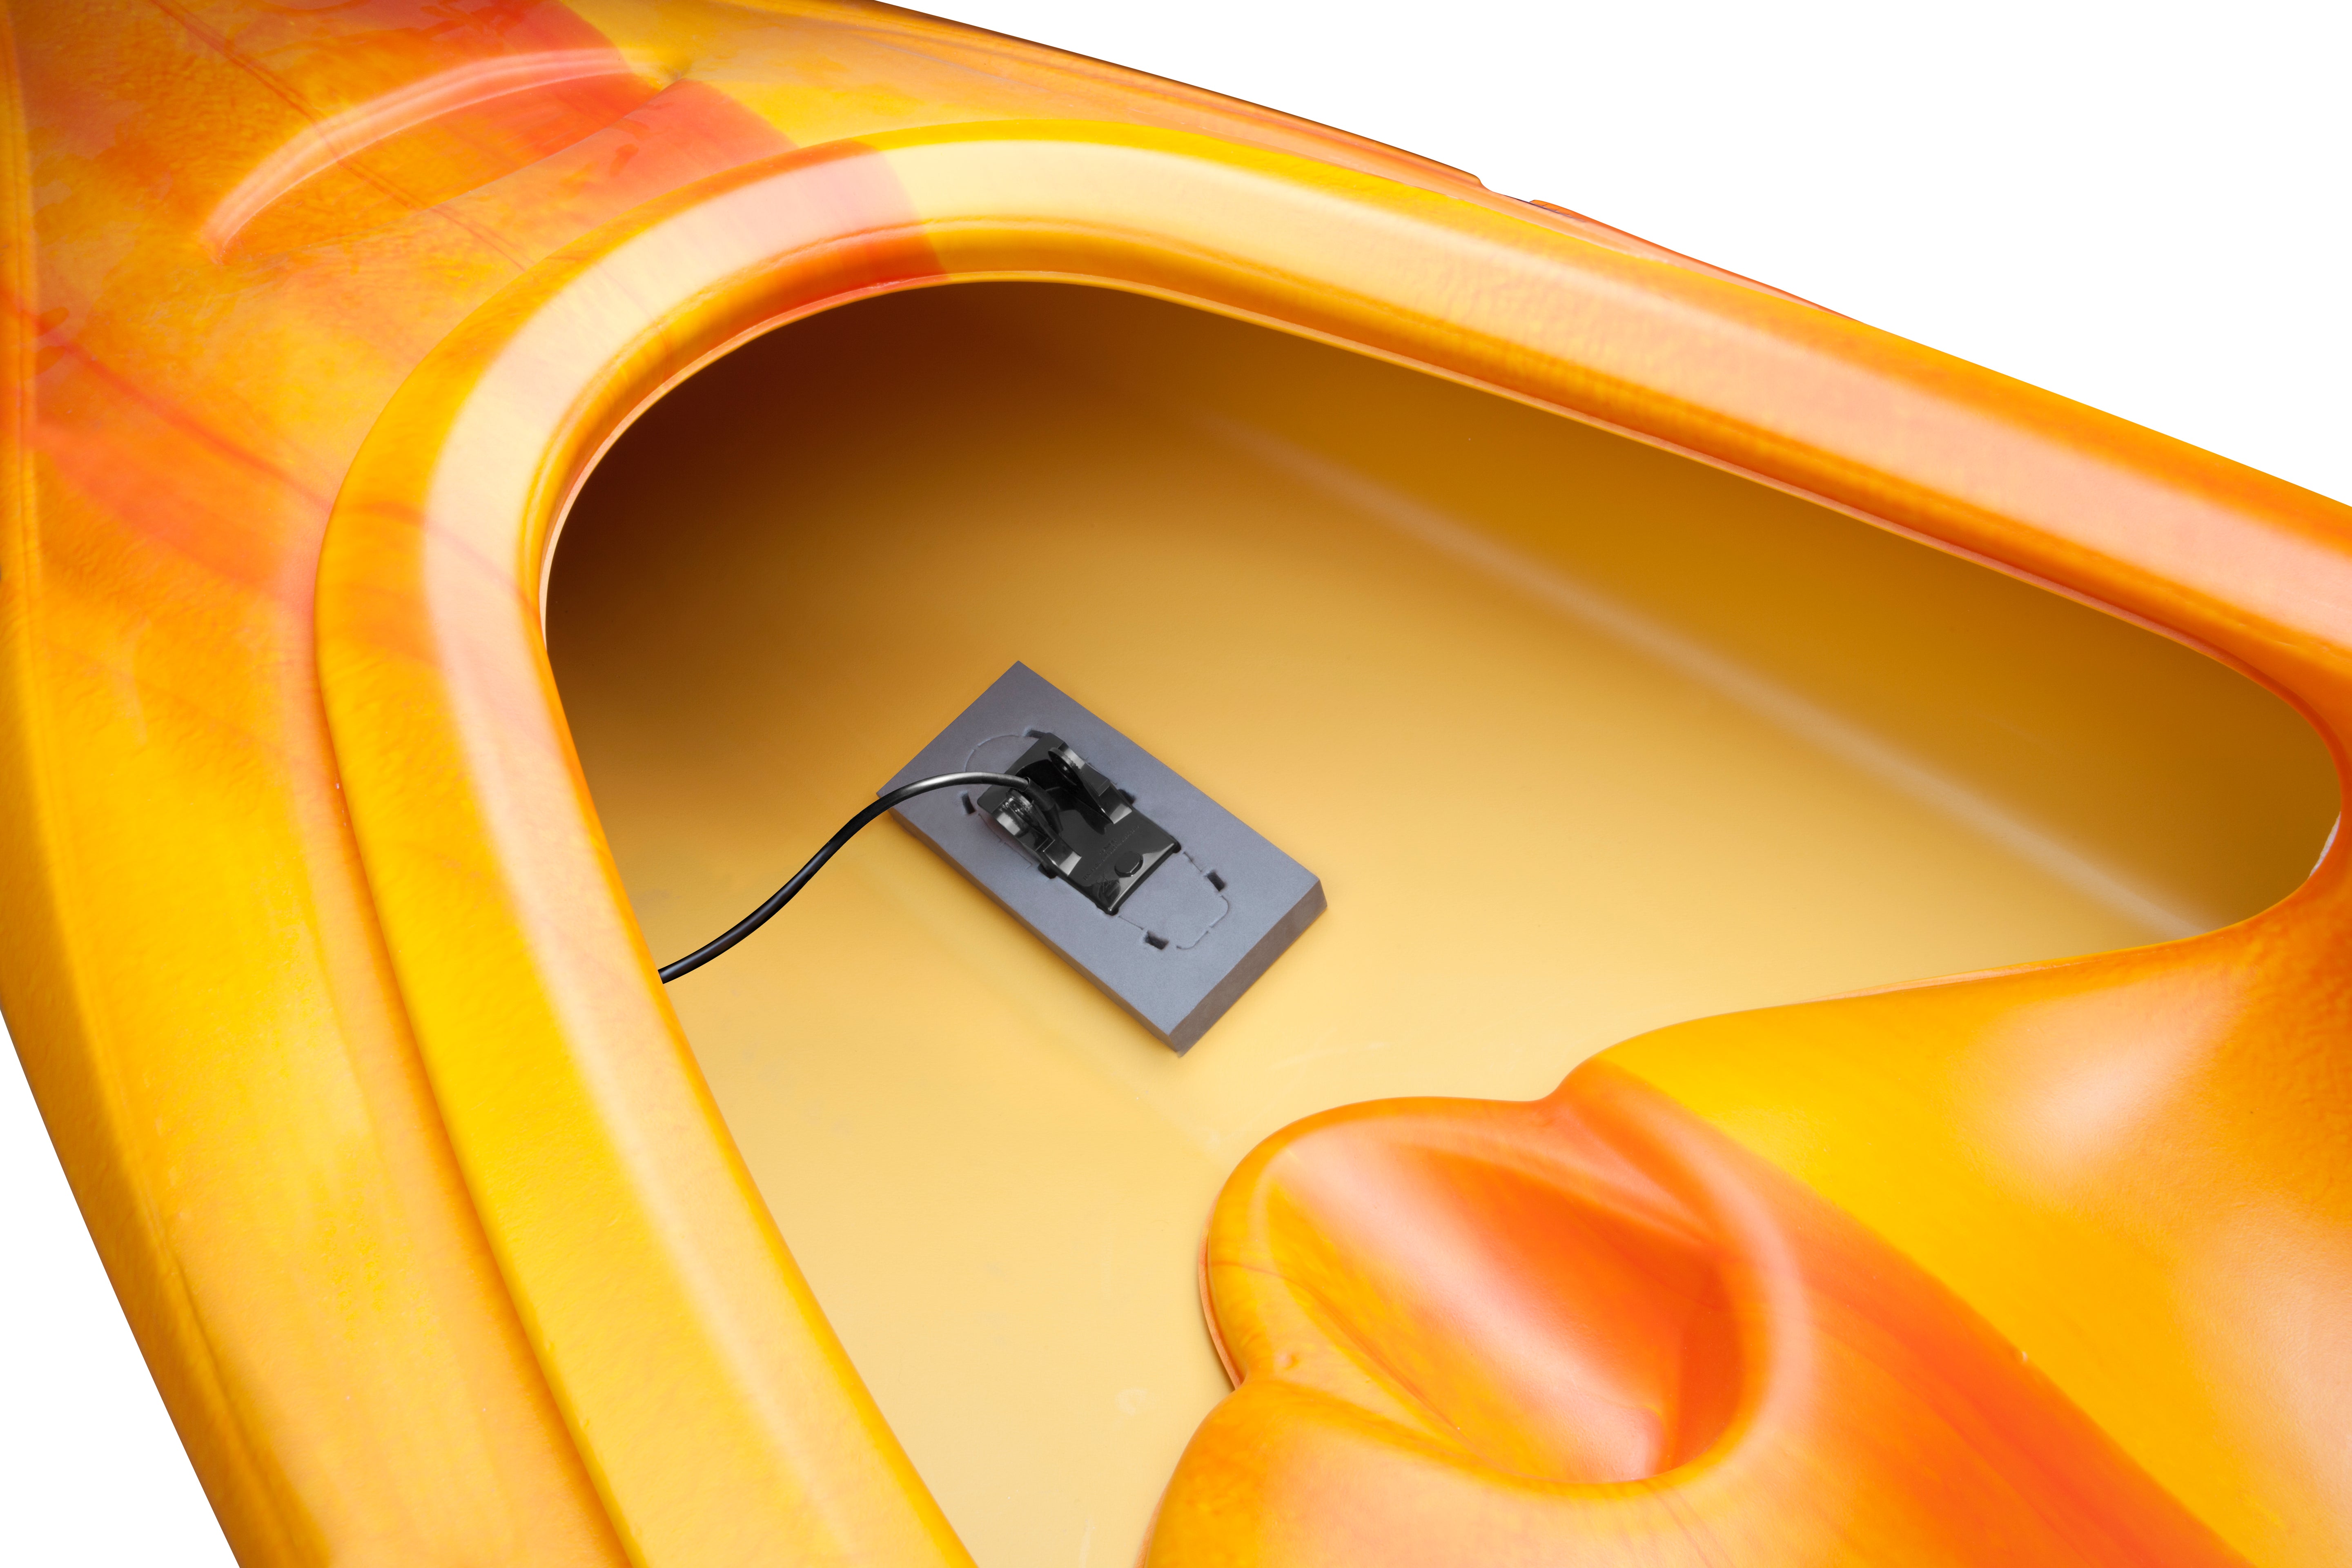 Garmin Hull-through transducer holder for kayak